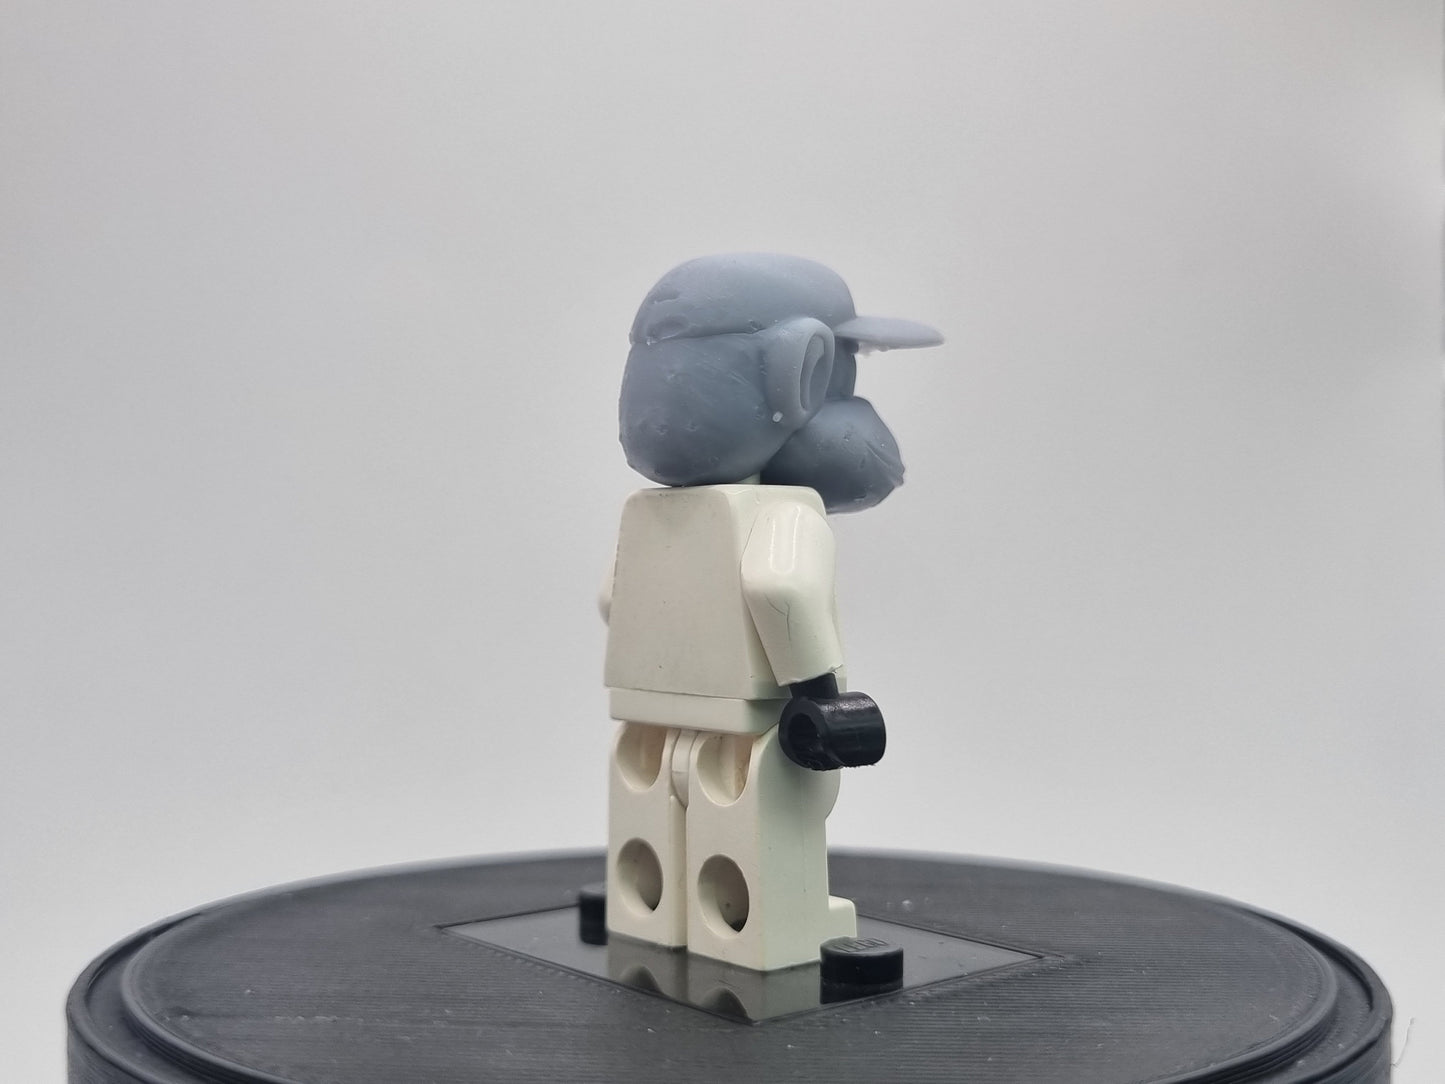 Building toy custom 3D printed monkey head!